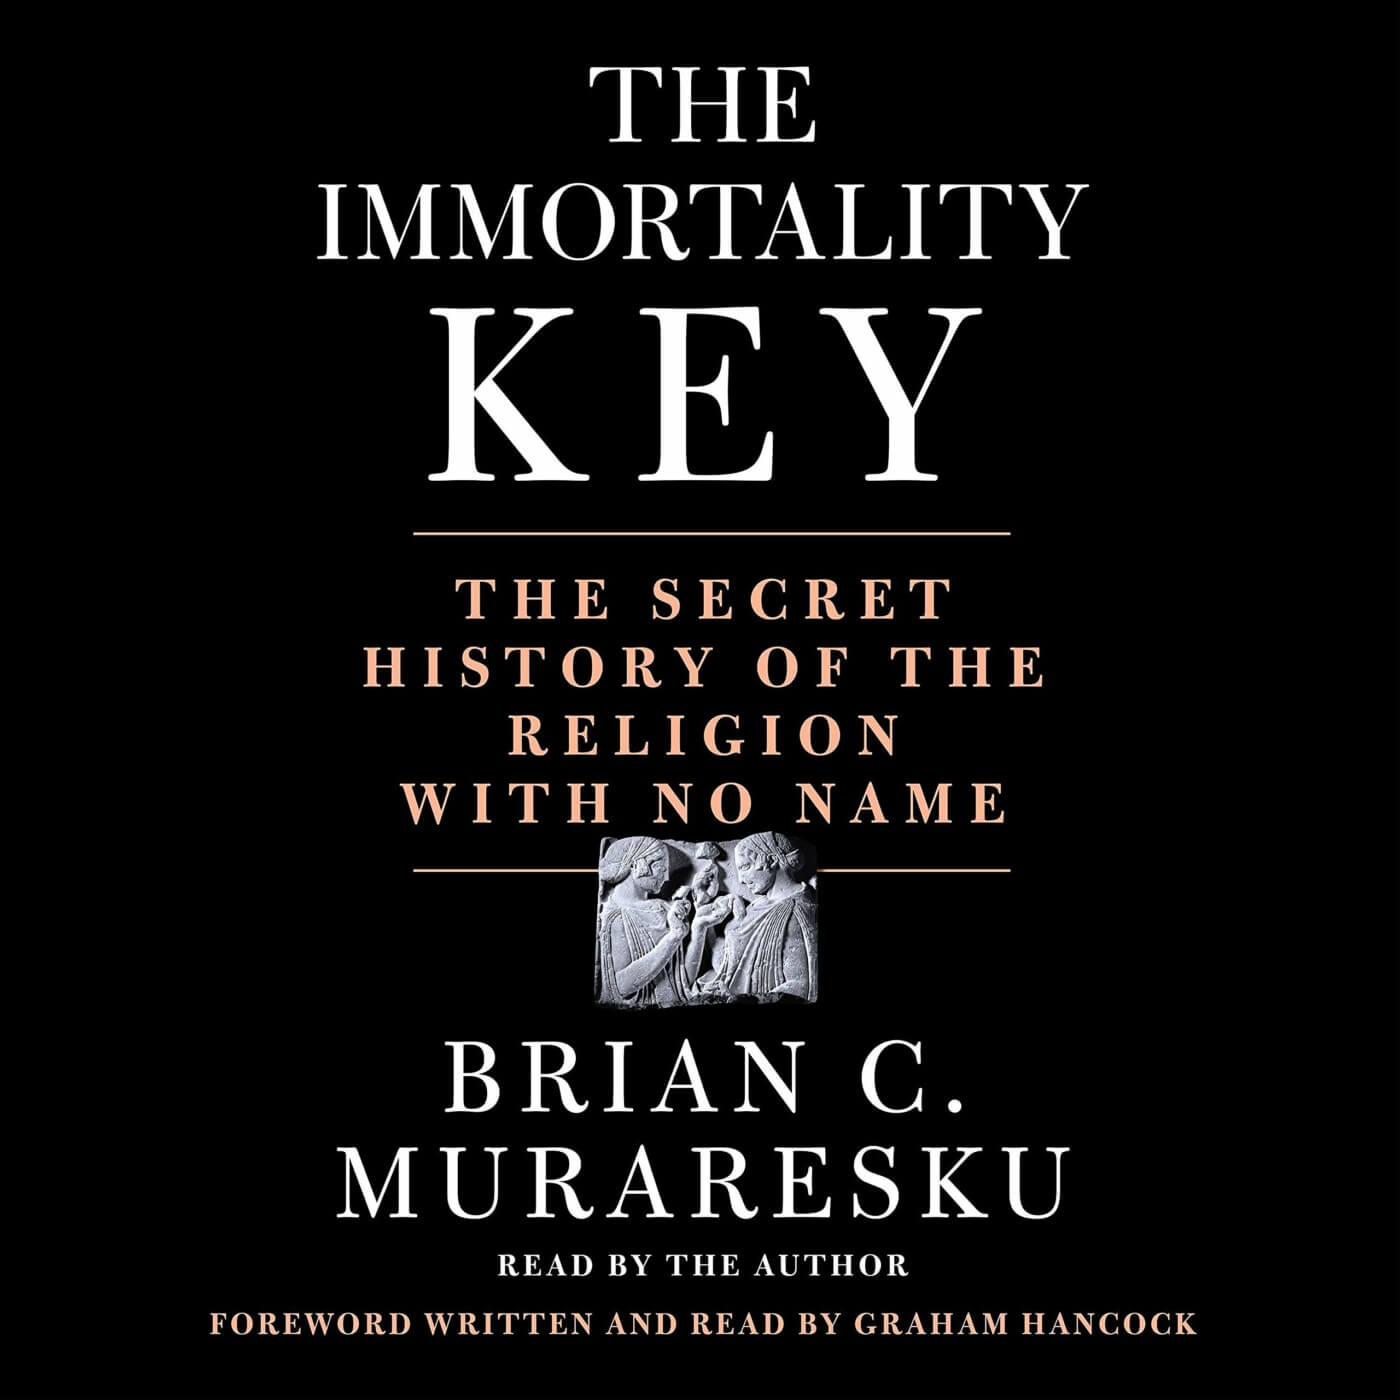 The Immortality Key by Brian C. Muraresku